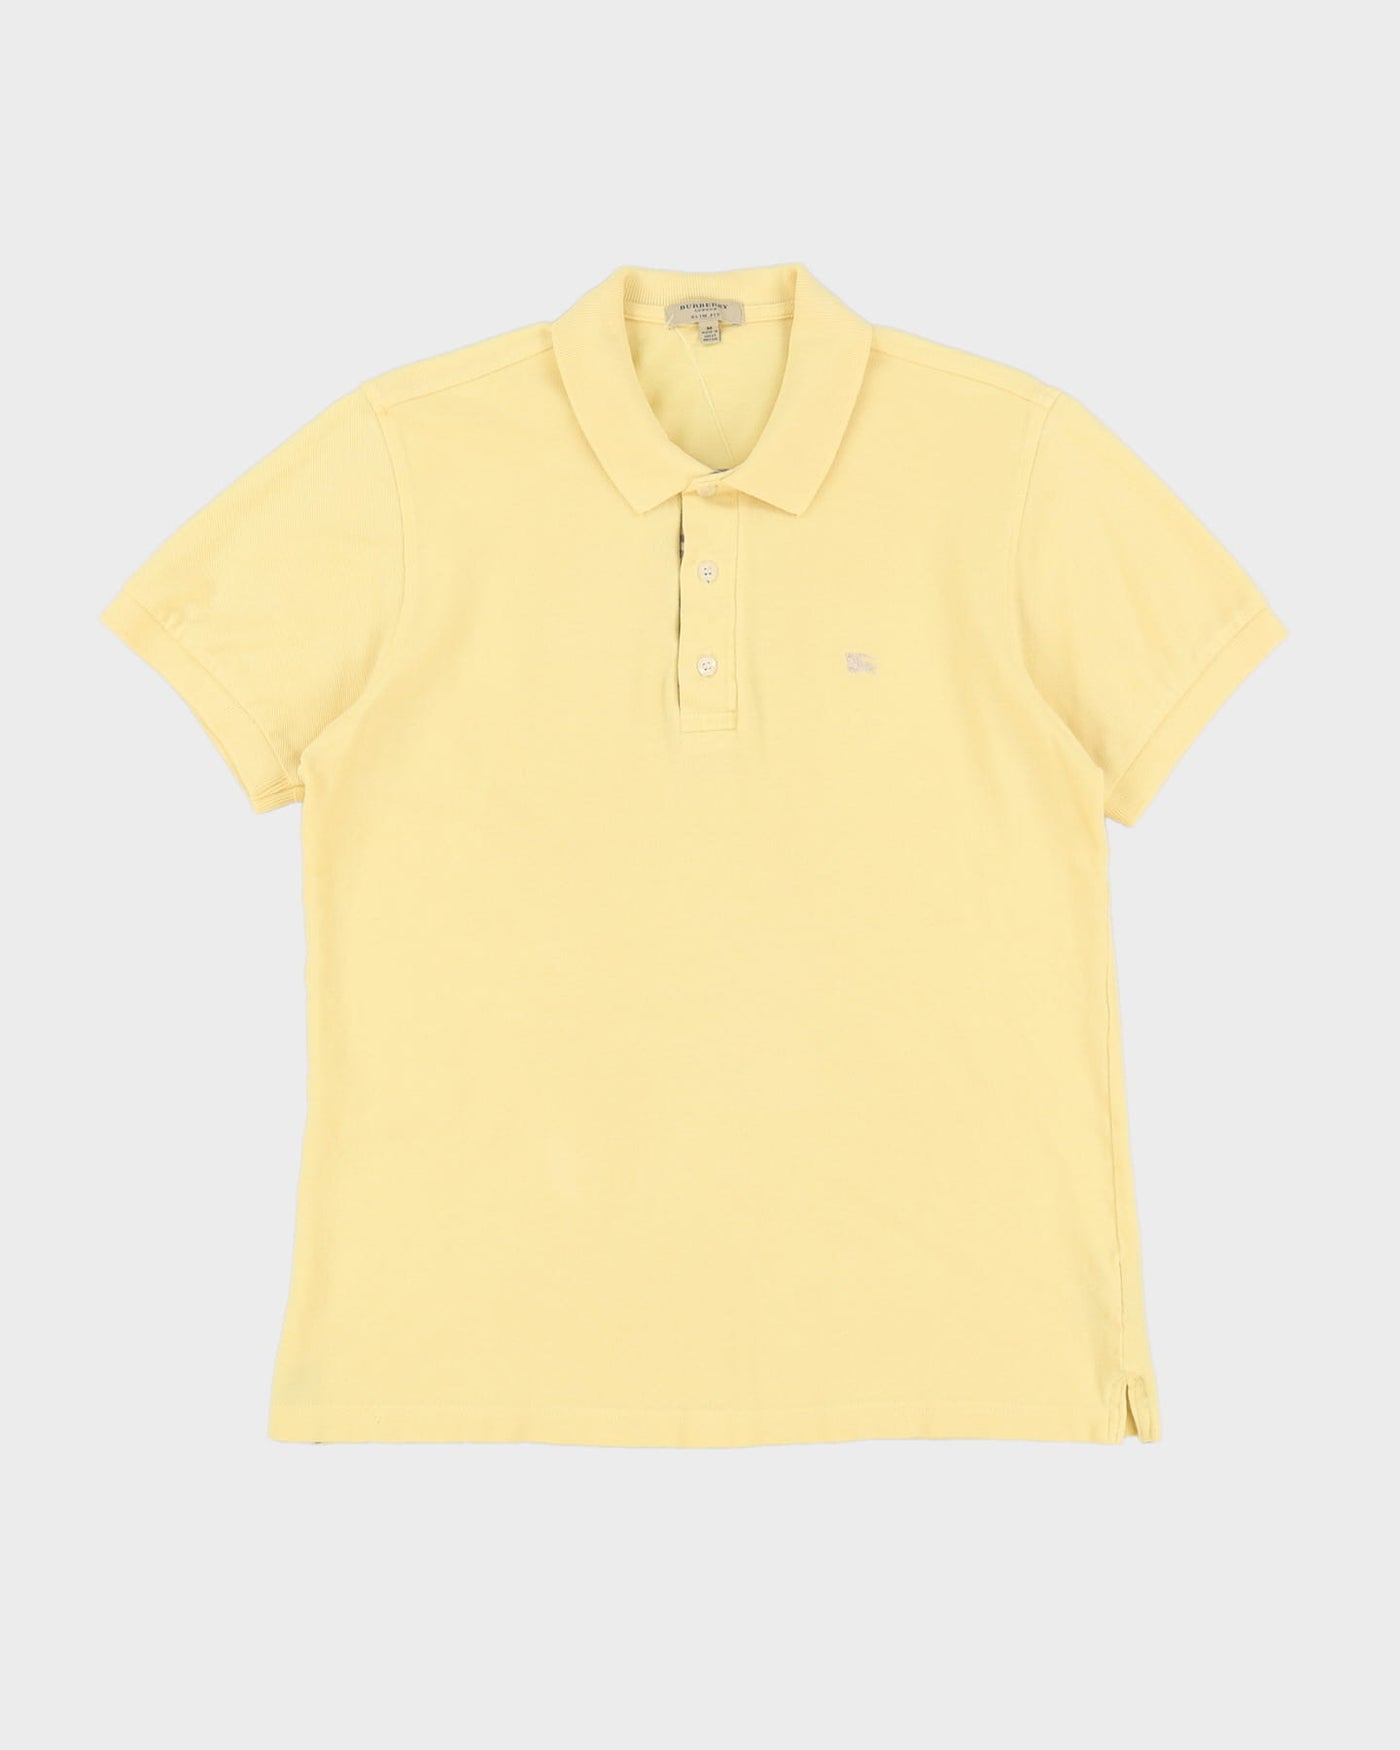 Burberry Slim Fit Yellow Polo Shirt - M